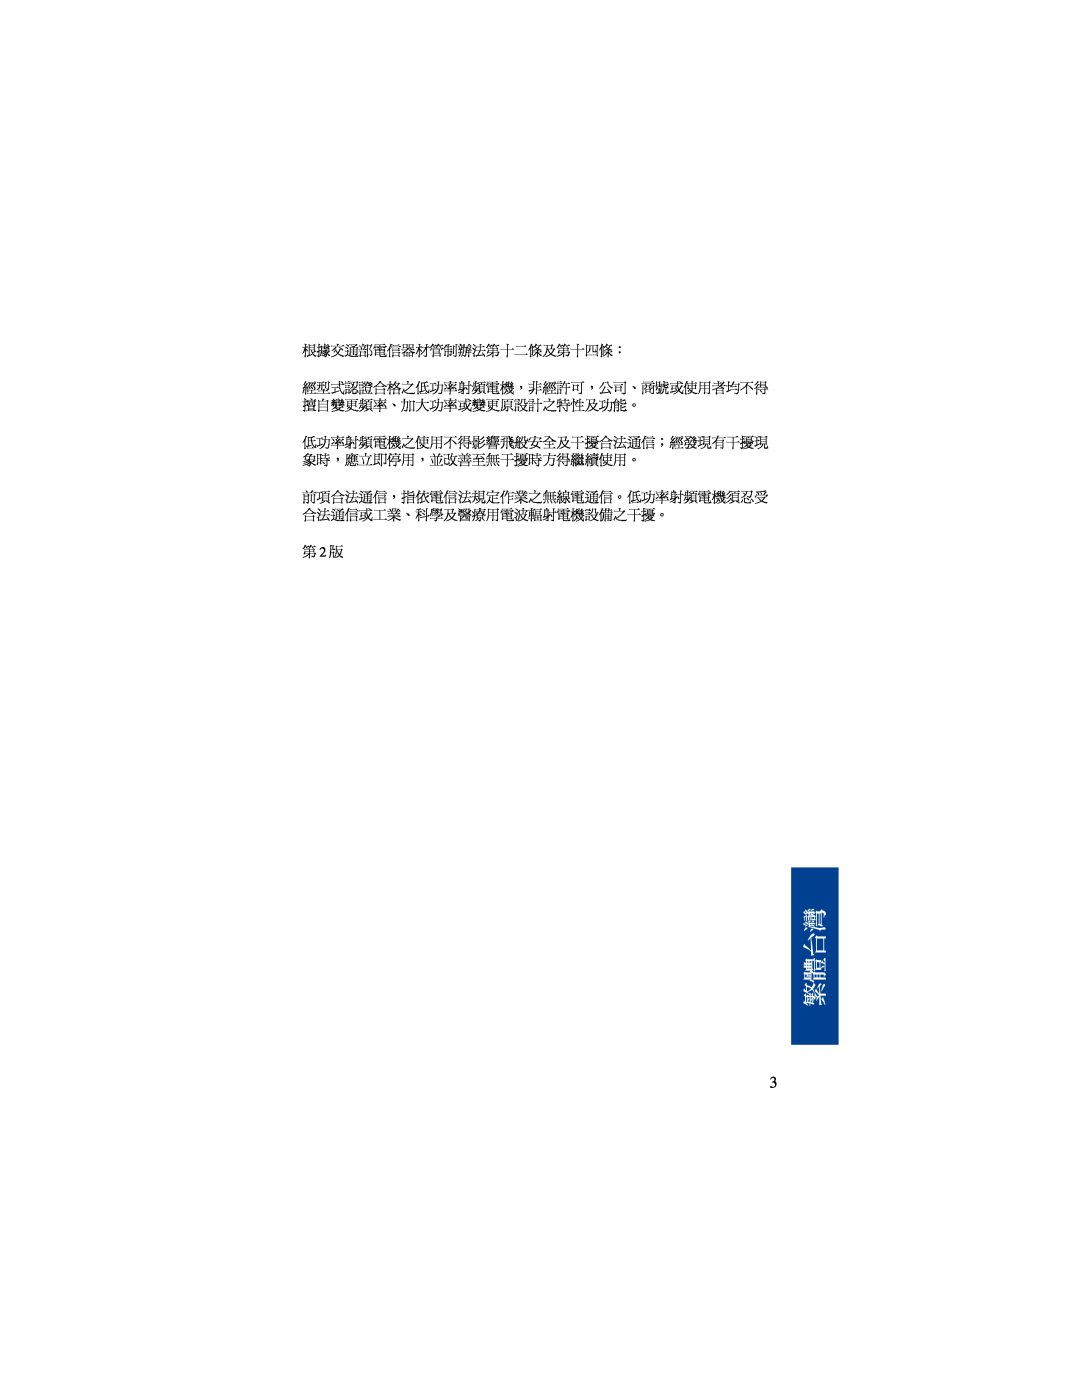 Nokia BH-500 manual 繁體台灣, 根據交通部電信器材管制辦法第十二條及第十四條：, 第 2 版 